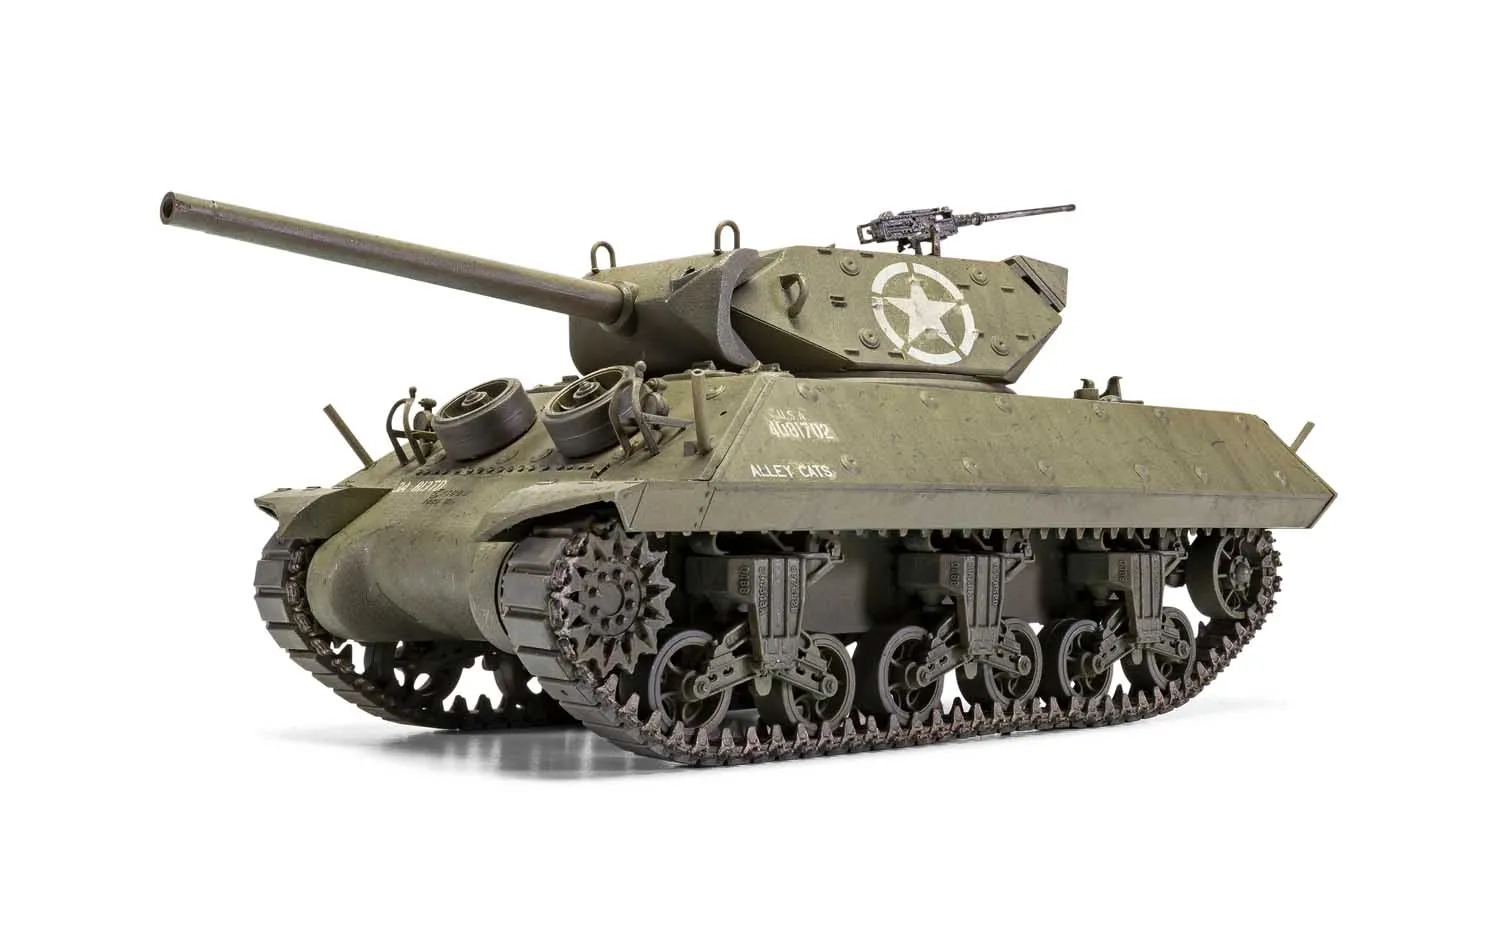 M10 GMC Tank Destroyer